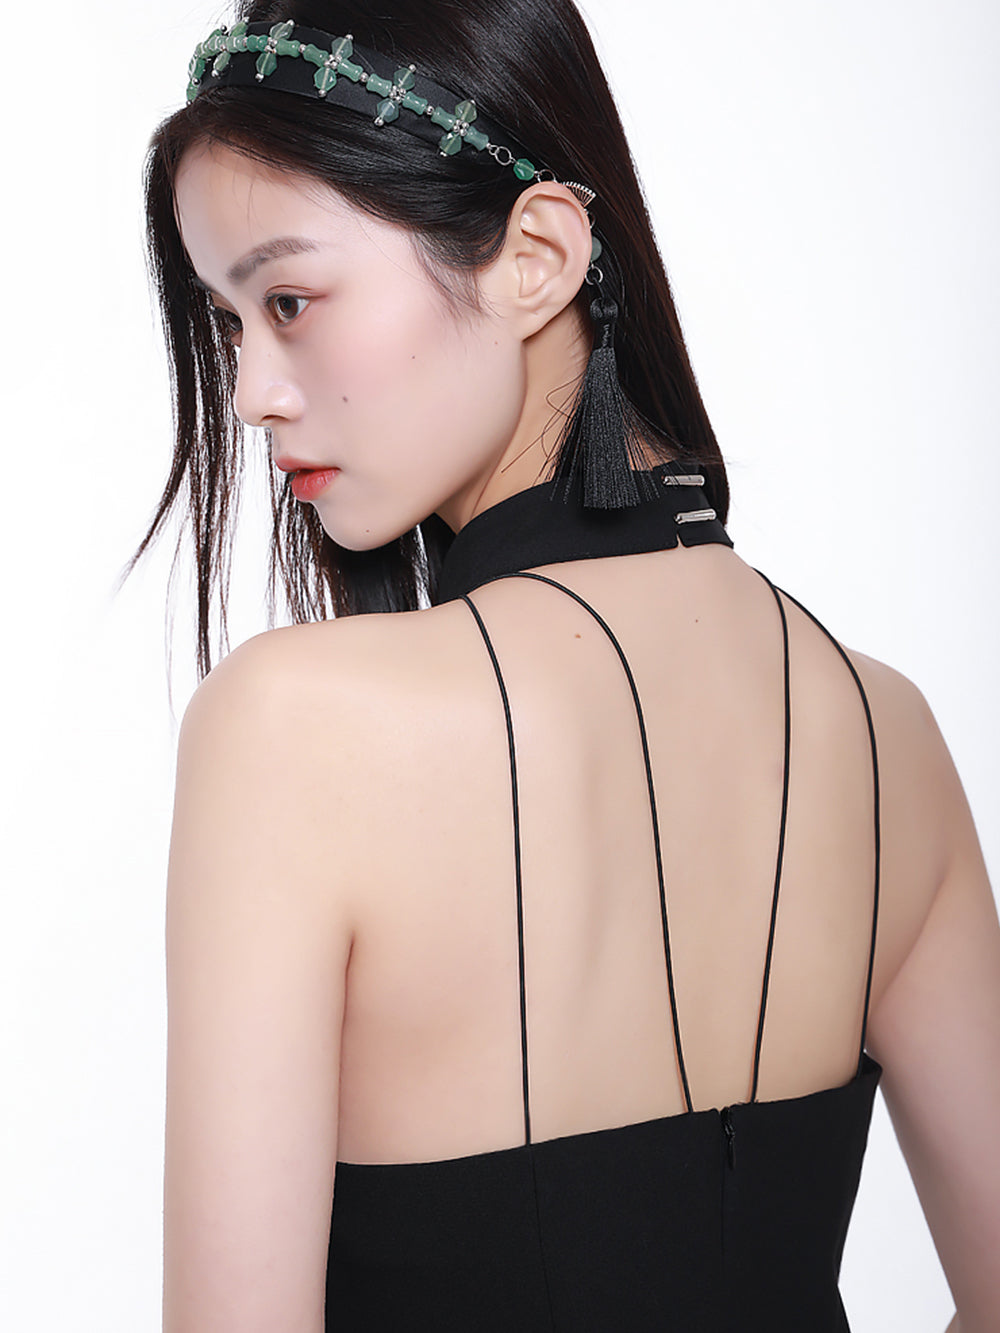 MUKTANK×CUUDICLAB Modified Qipao Backless Dress Cheongsam